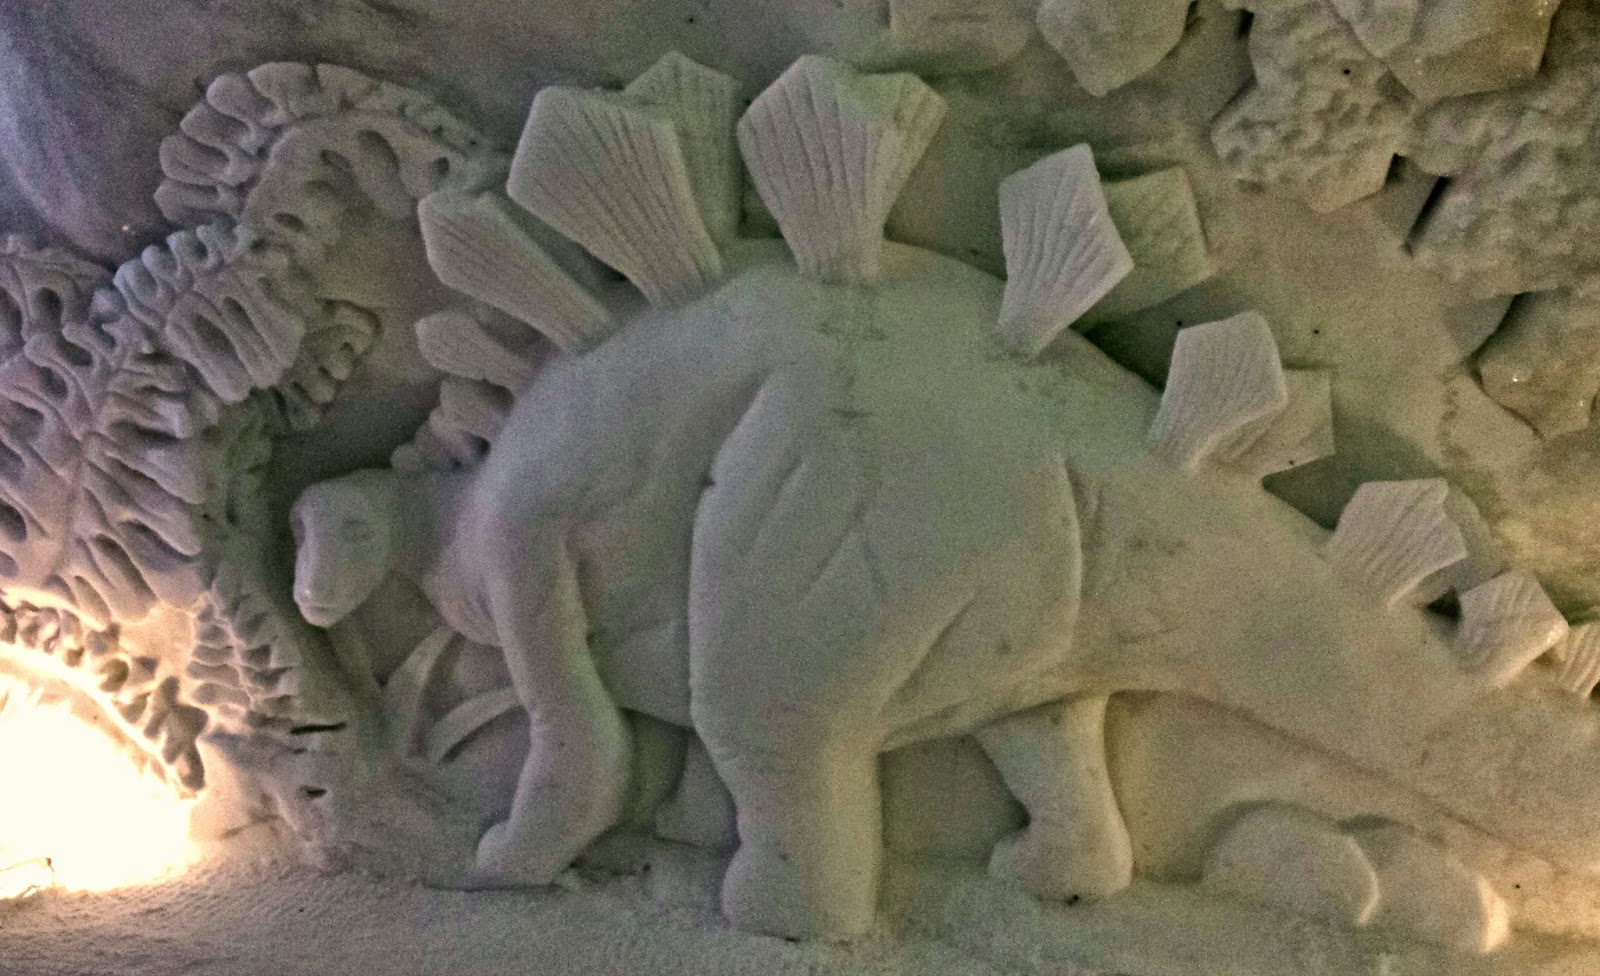 Dinosaur snow sculpture at the Ice Hotel, Quebec City